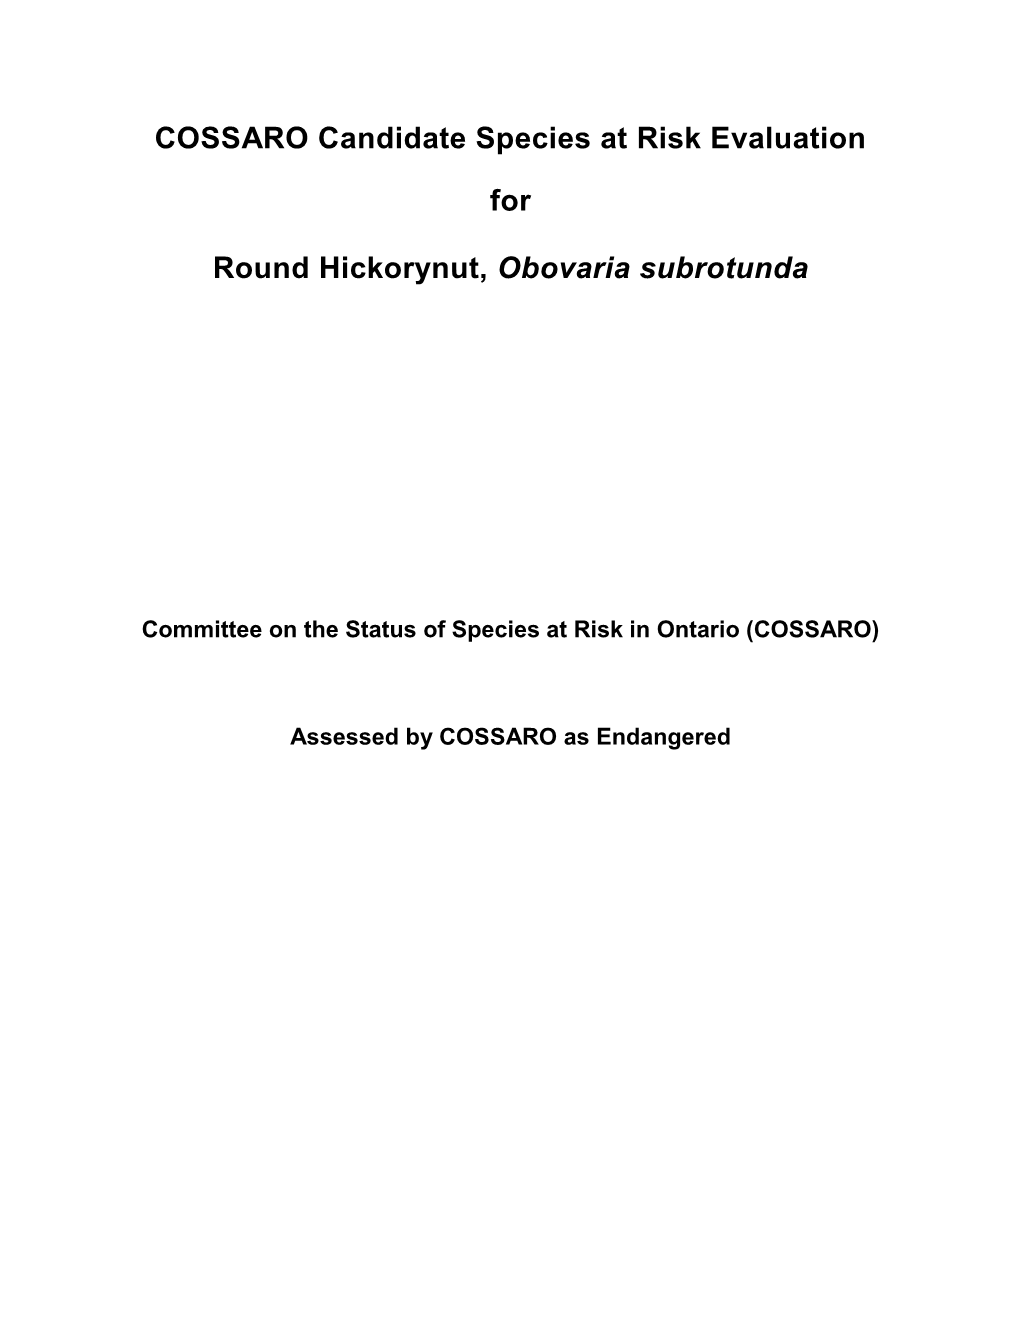 COSSARO Candidate Species at Risk Evaluation for Round Hickorynut, Obovaria Subrotunda